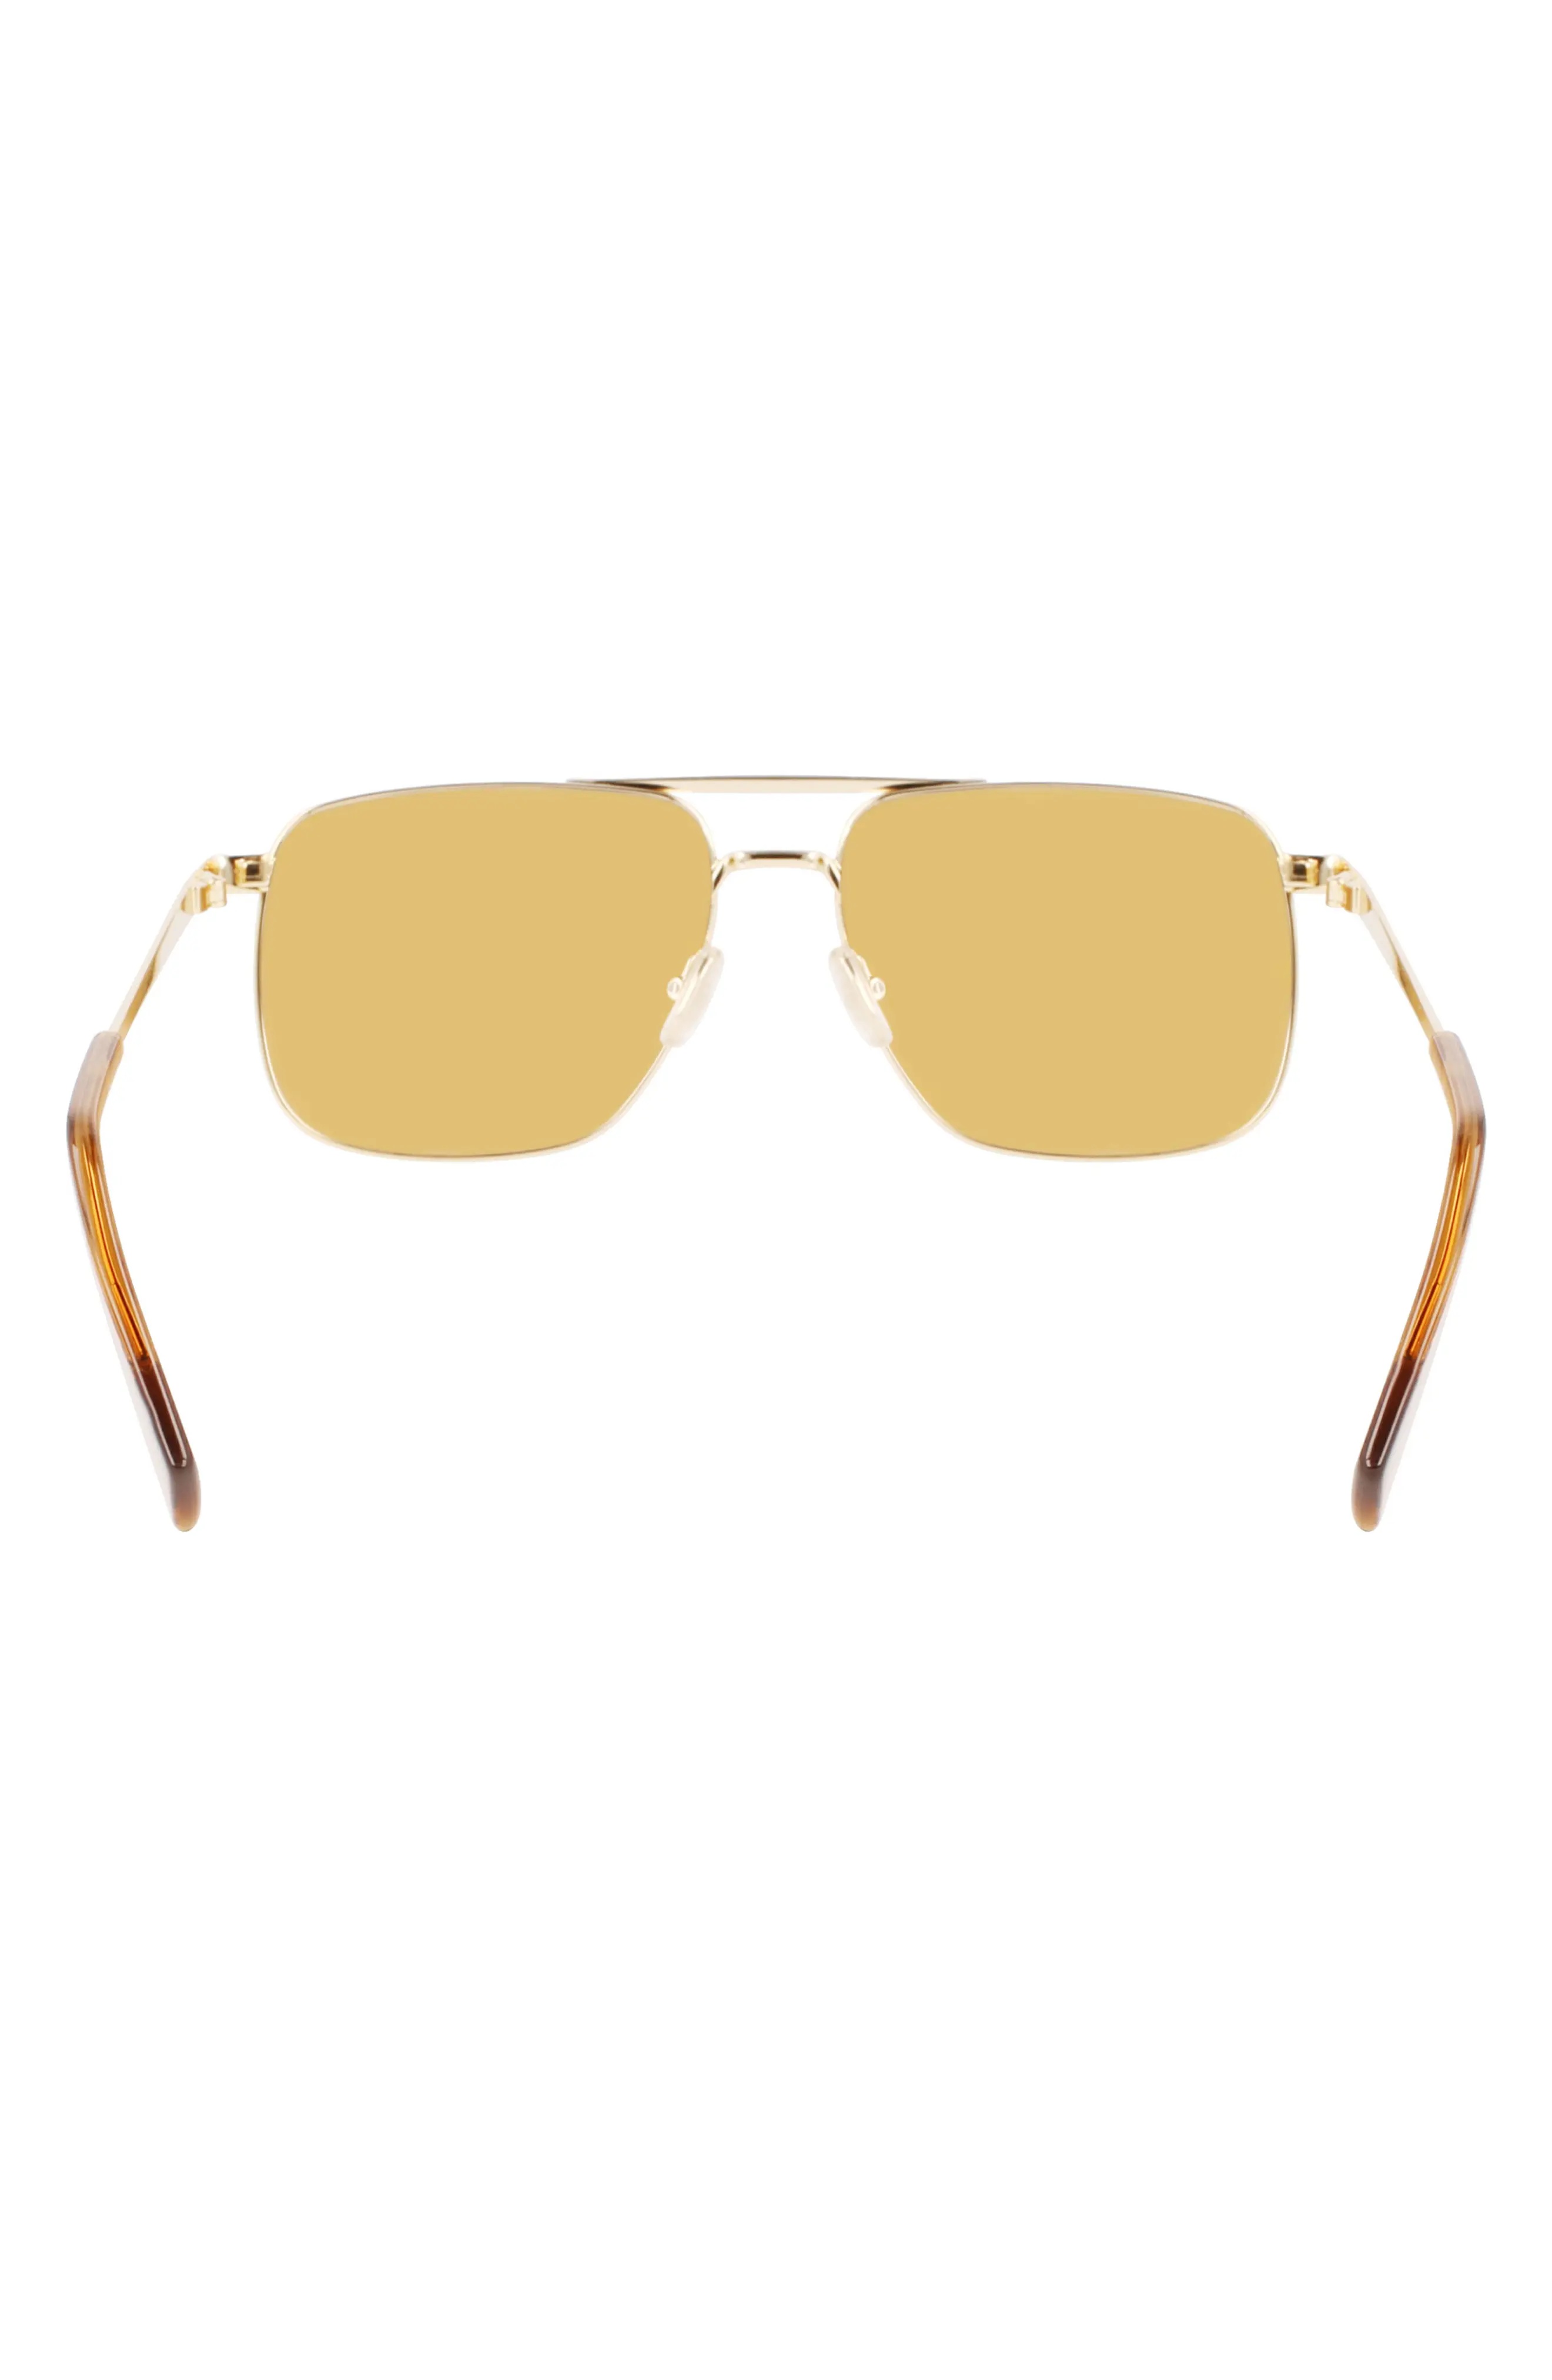 JL 58mm Rectangular Sunglasses in Gold /Caramel - 5